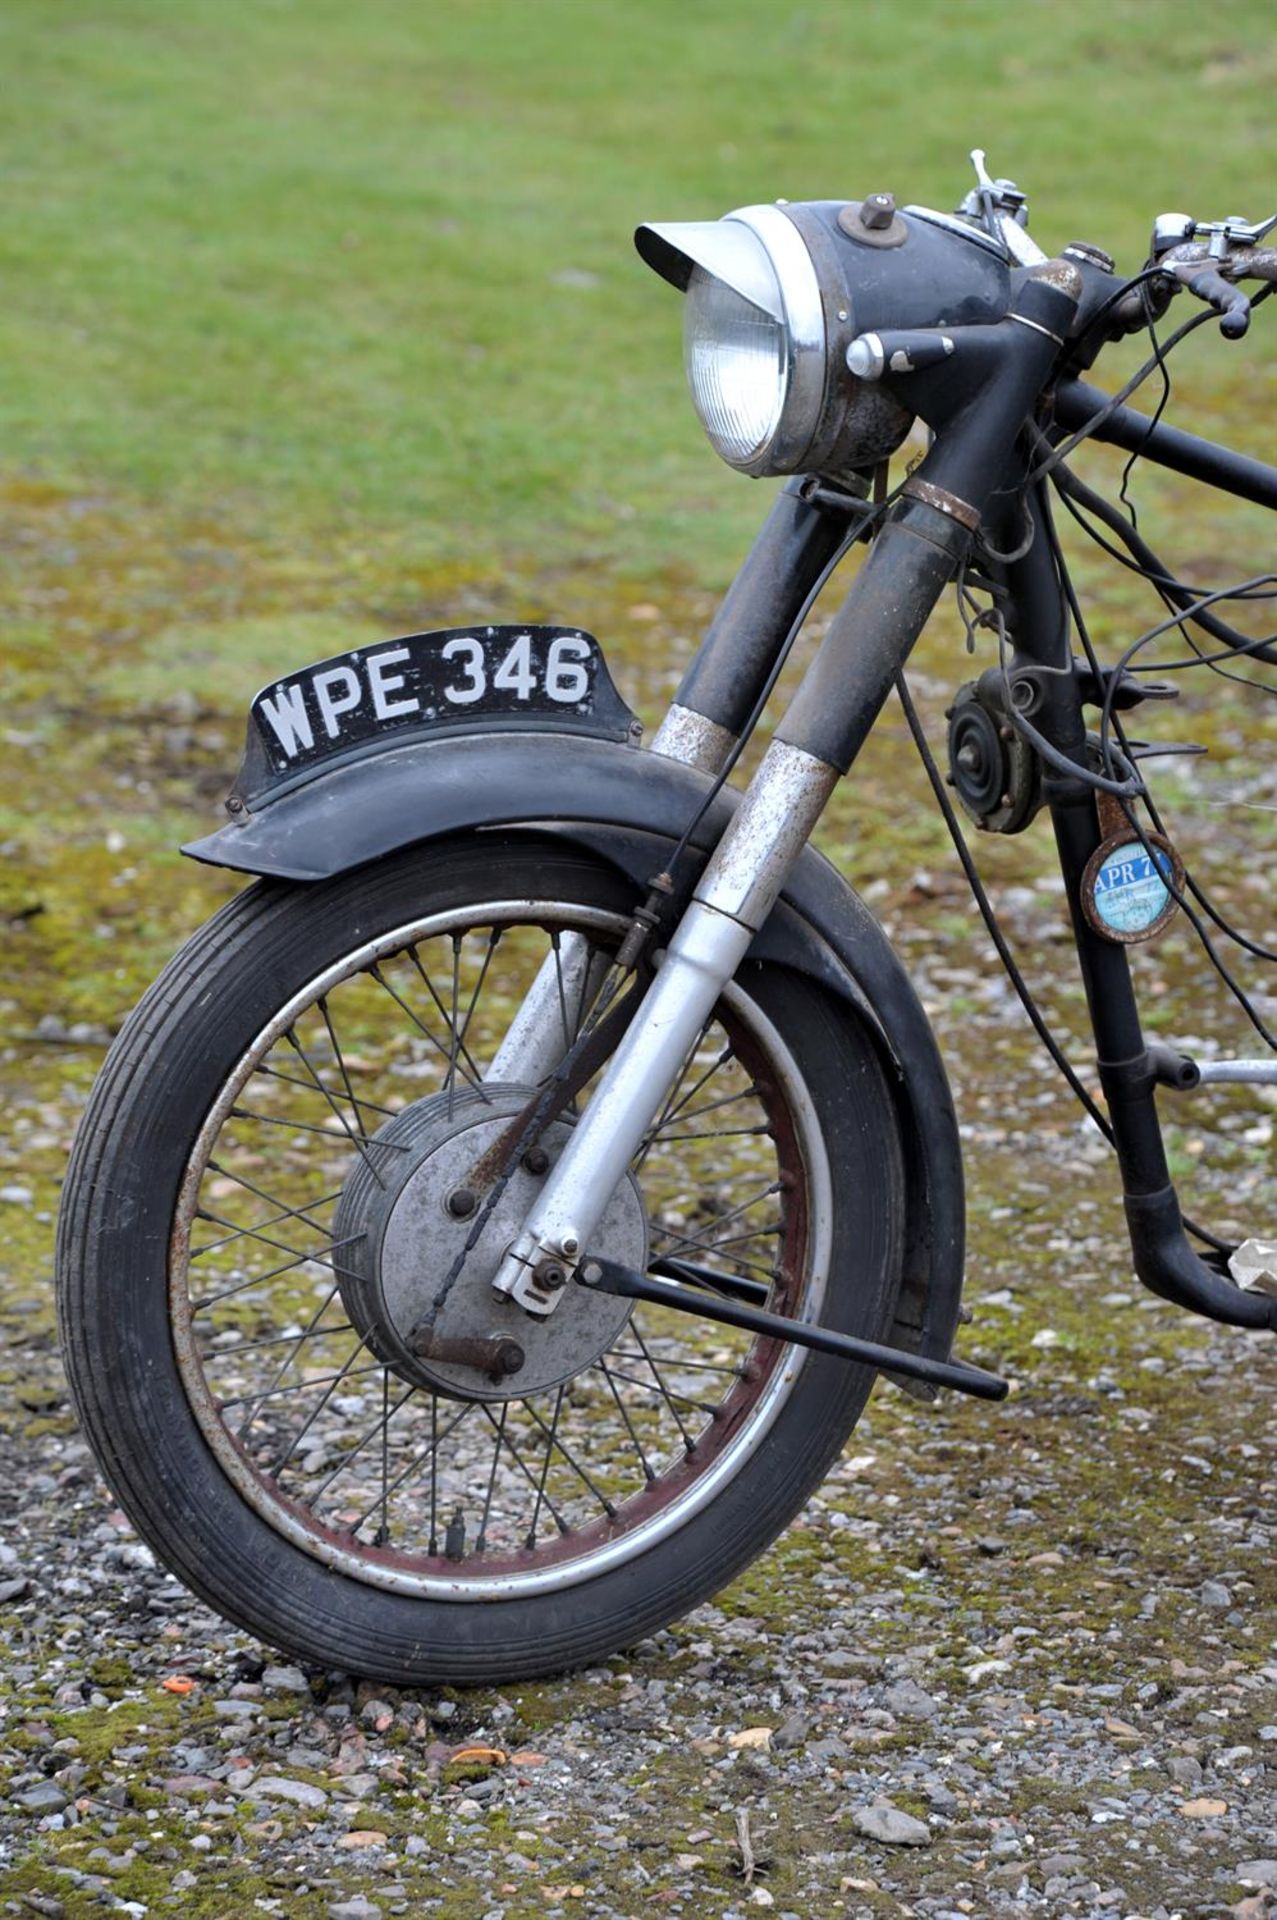 Motor Bike, Matchless. Registration number WPE 346. Comes with stamped Registration Book. - Image 2 of 10